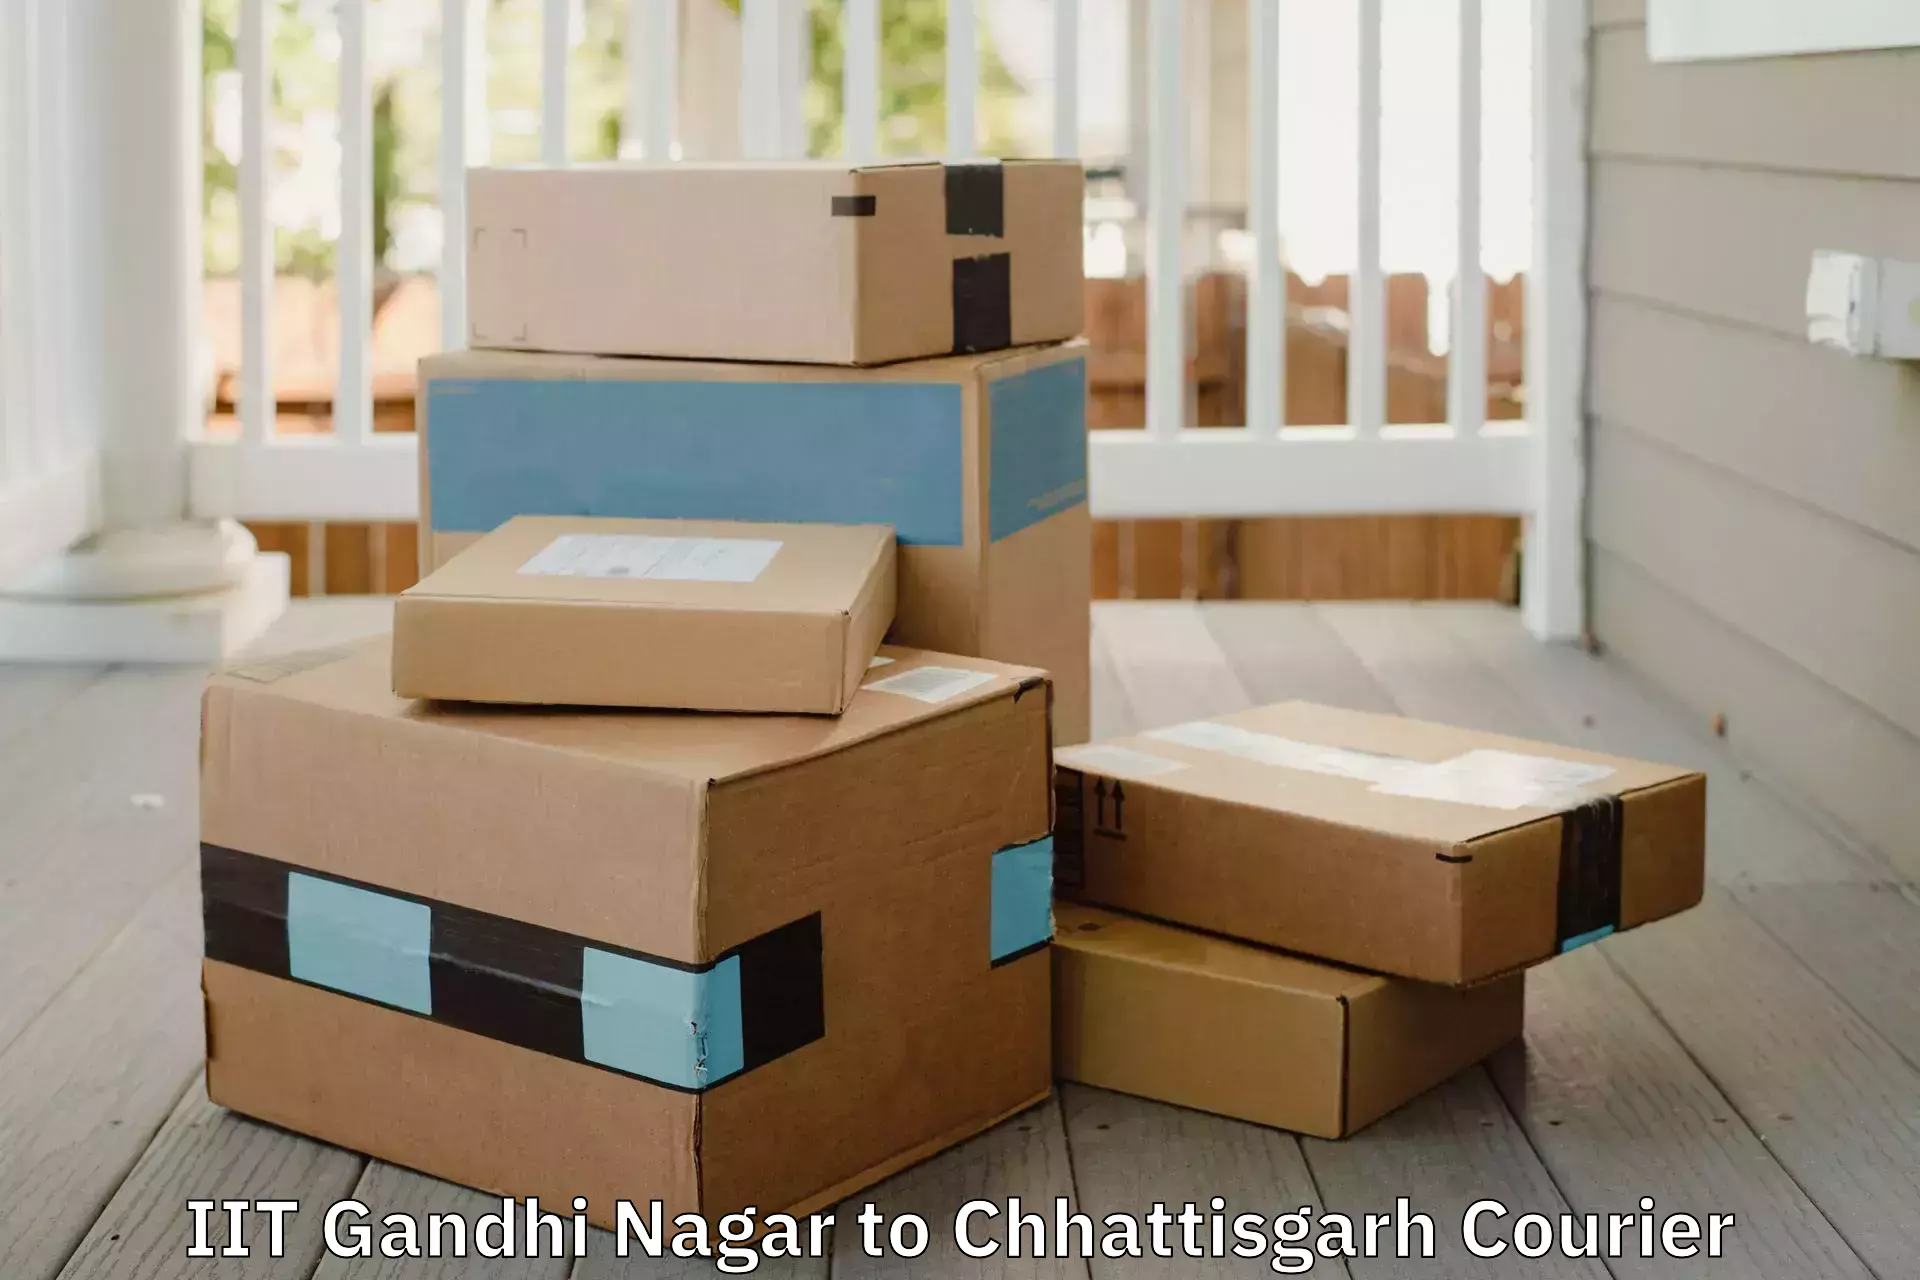 Professional packing services IIT Gandhi Nagar to Chhattisgarh